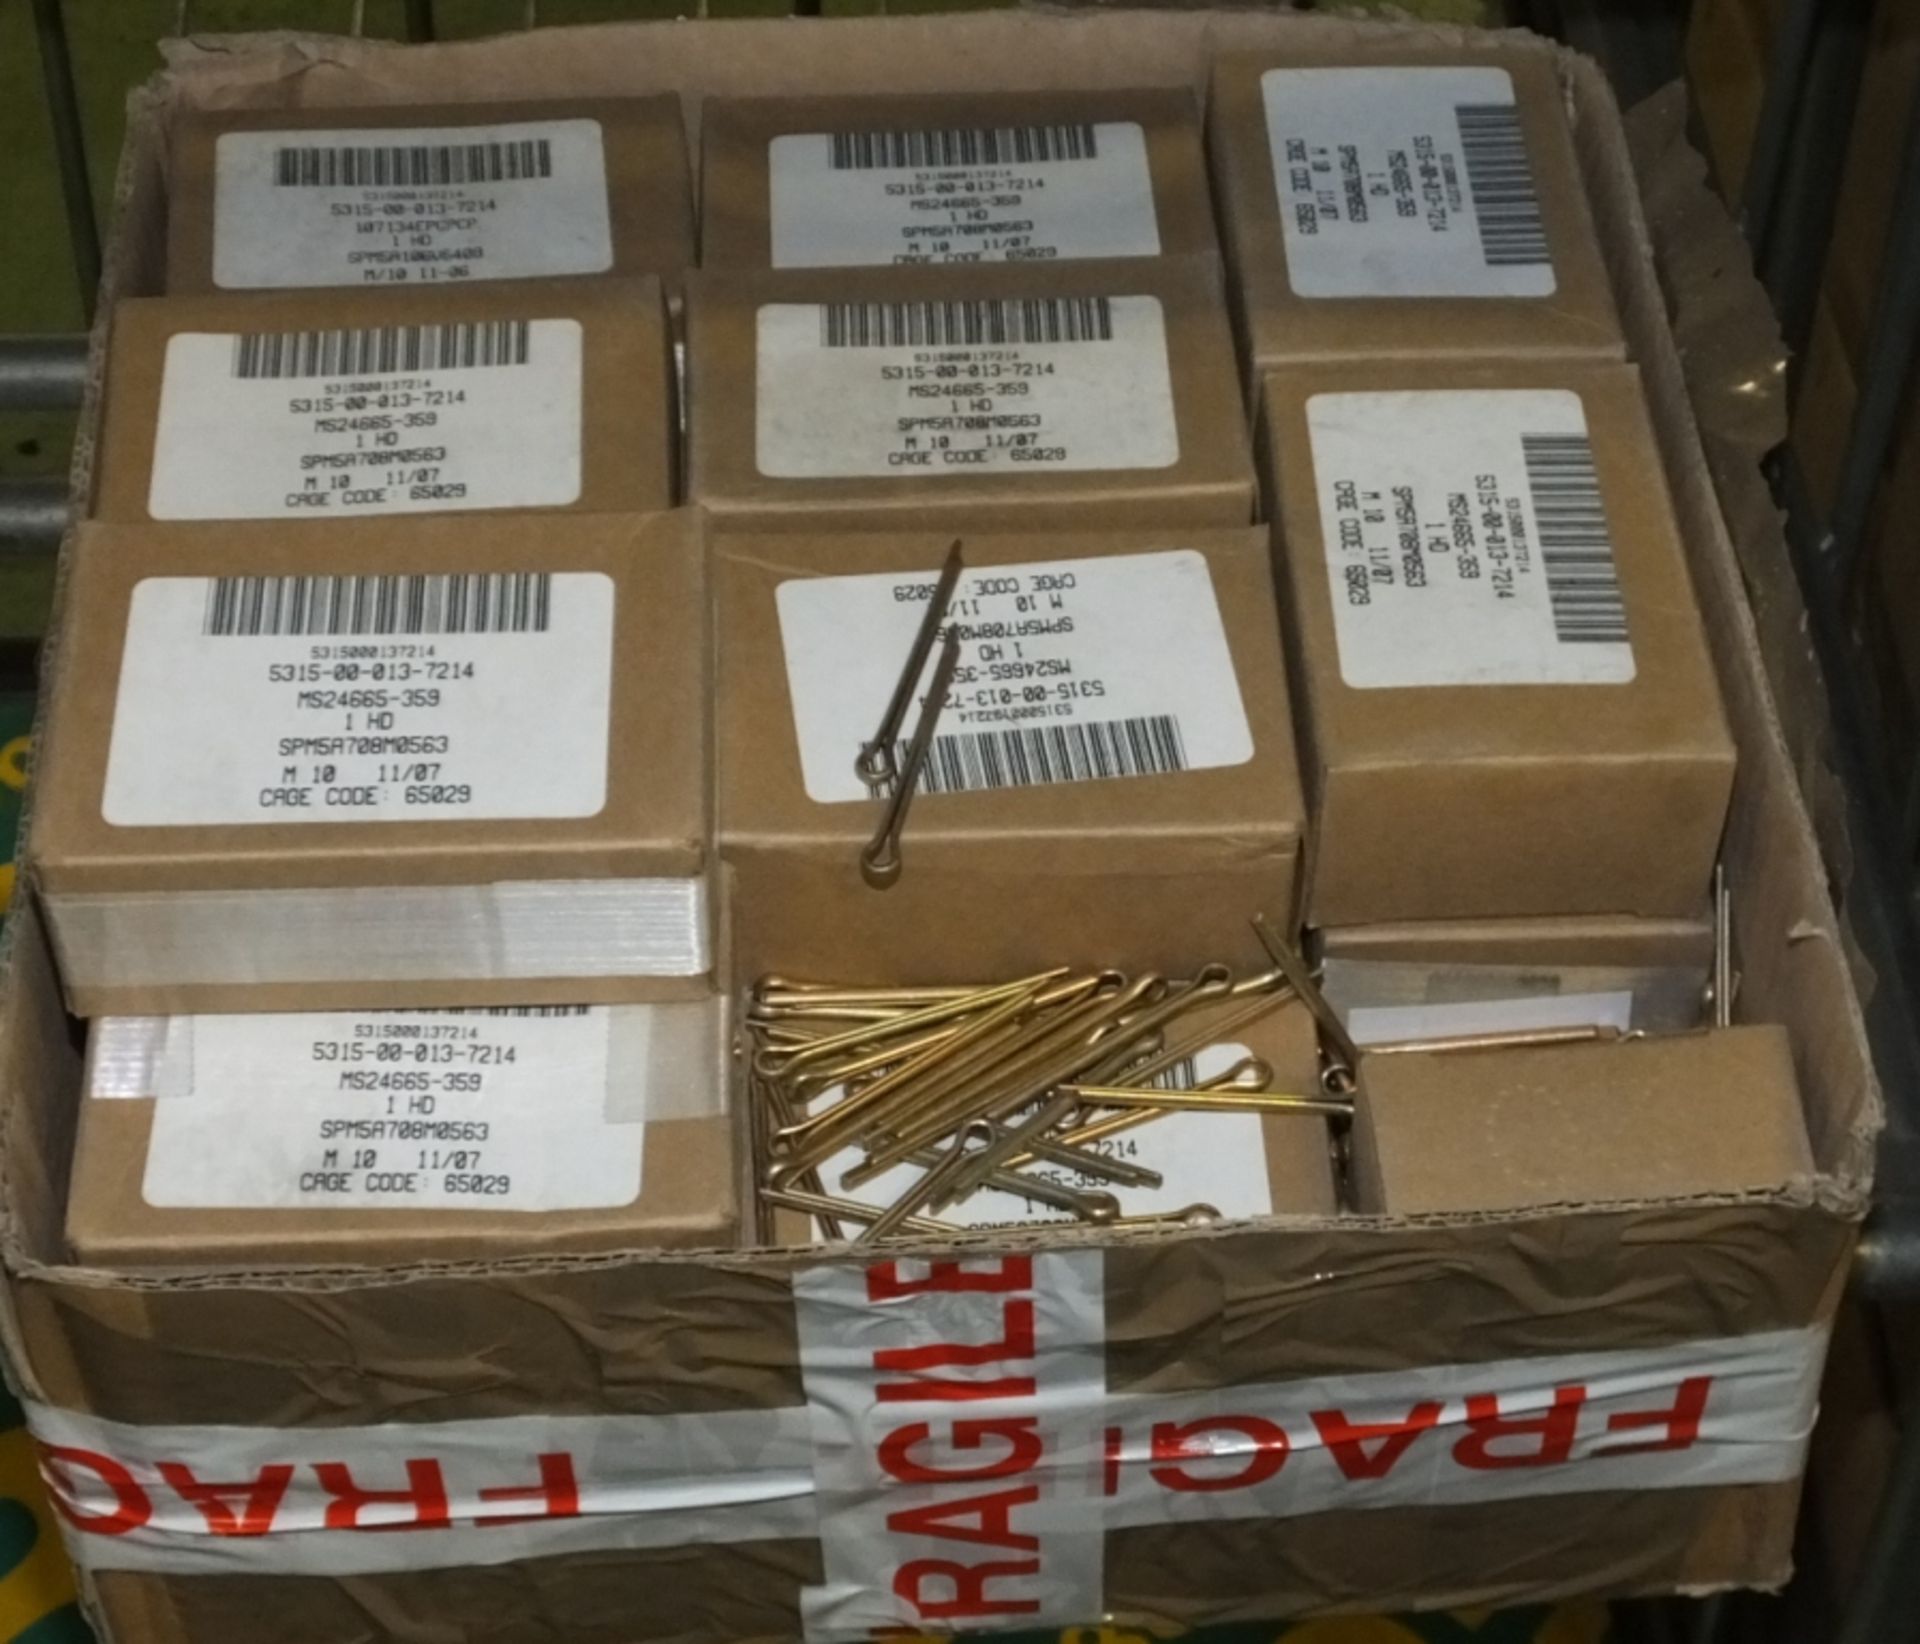 30x Boxes of Split PIns - NSN 5315-00-013-7214